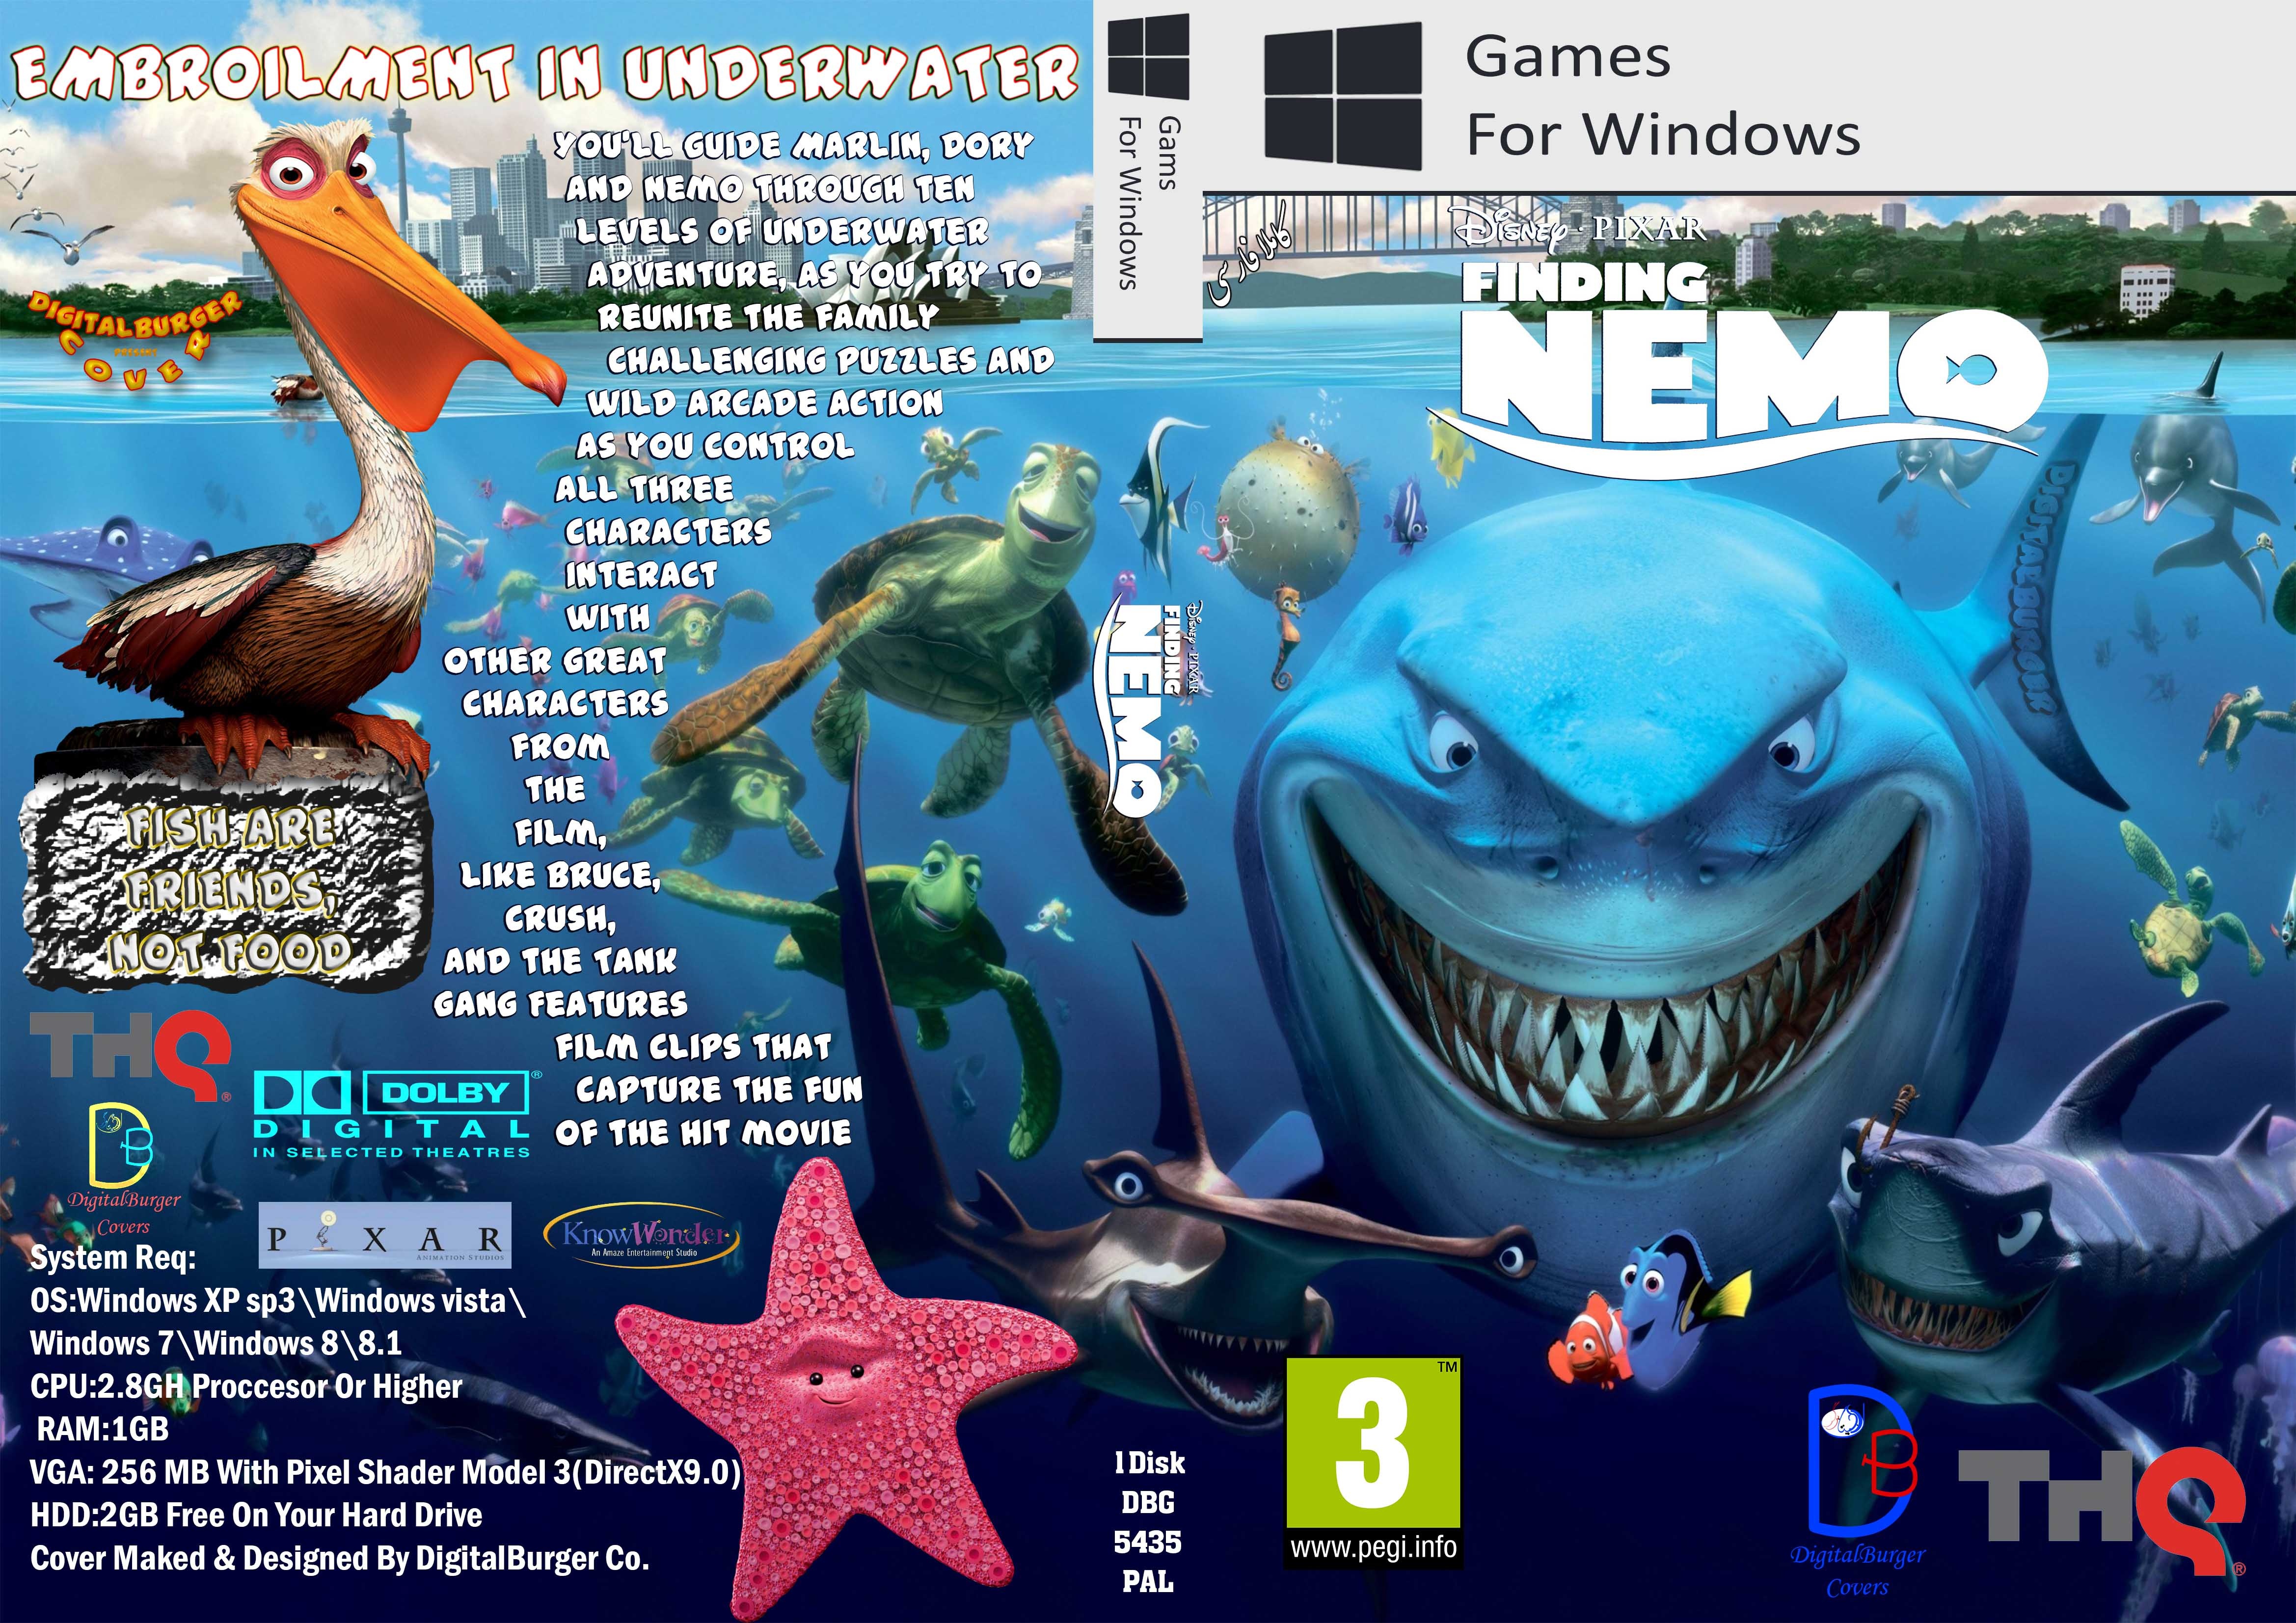 Finding Nemo DB Cover box cover